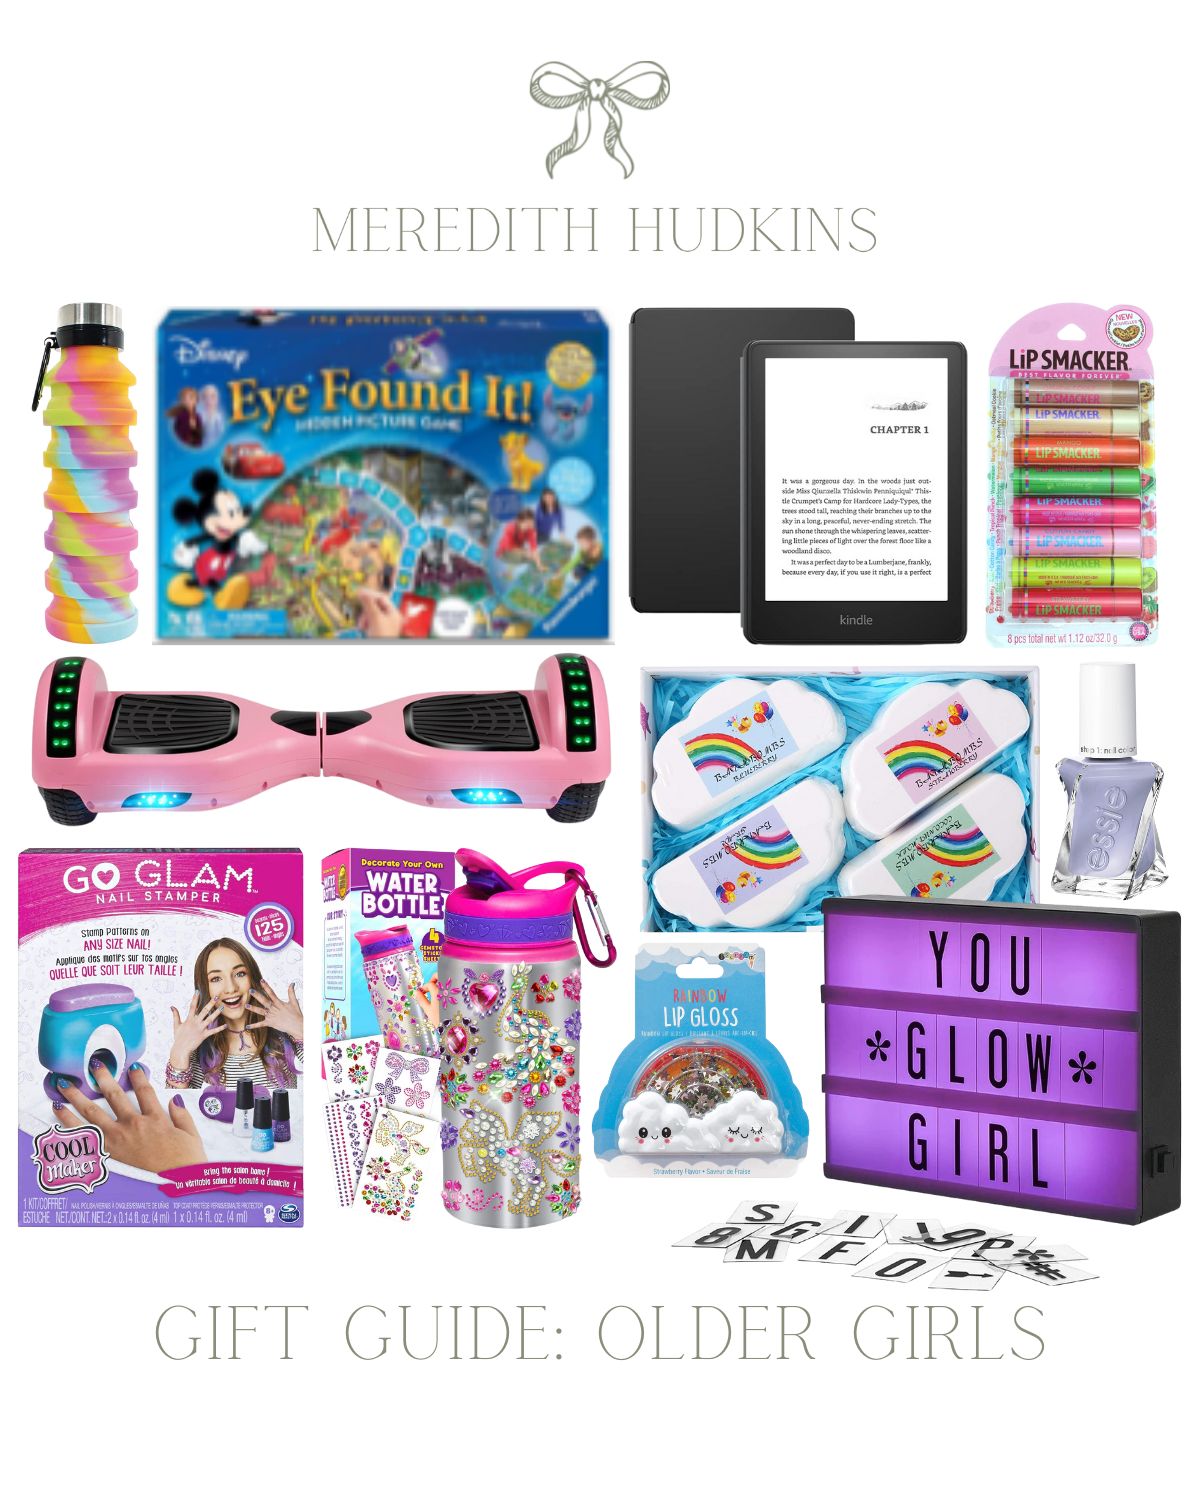 Meredith Hudkins's Amazon Page | Amazon (US)